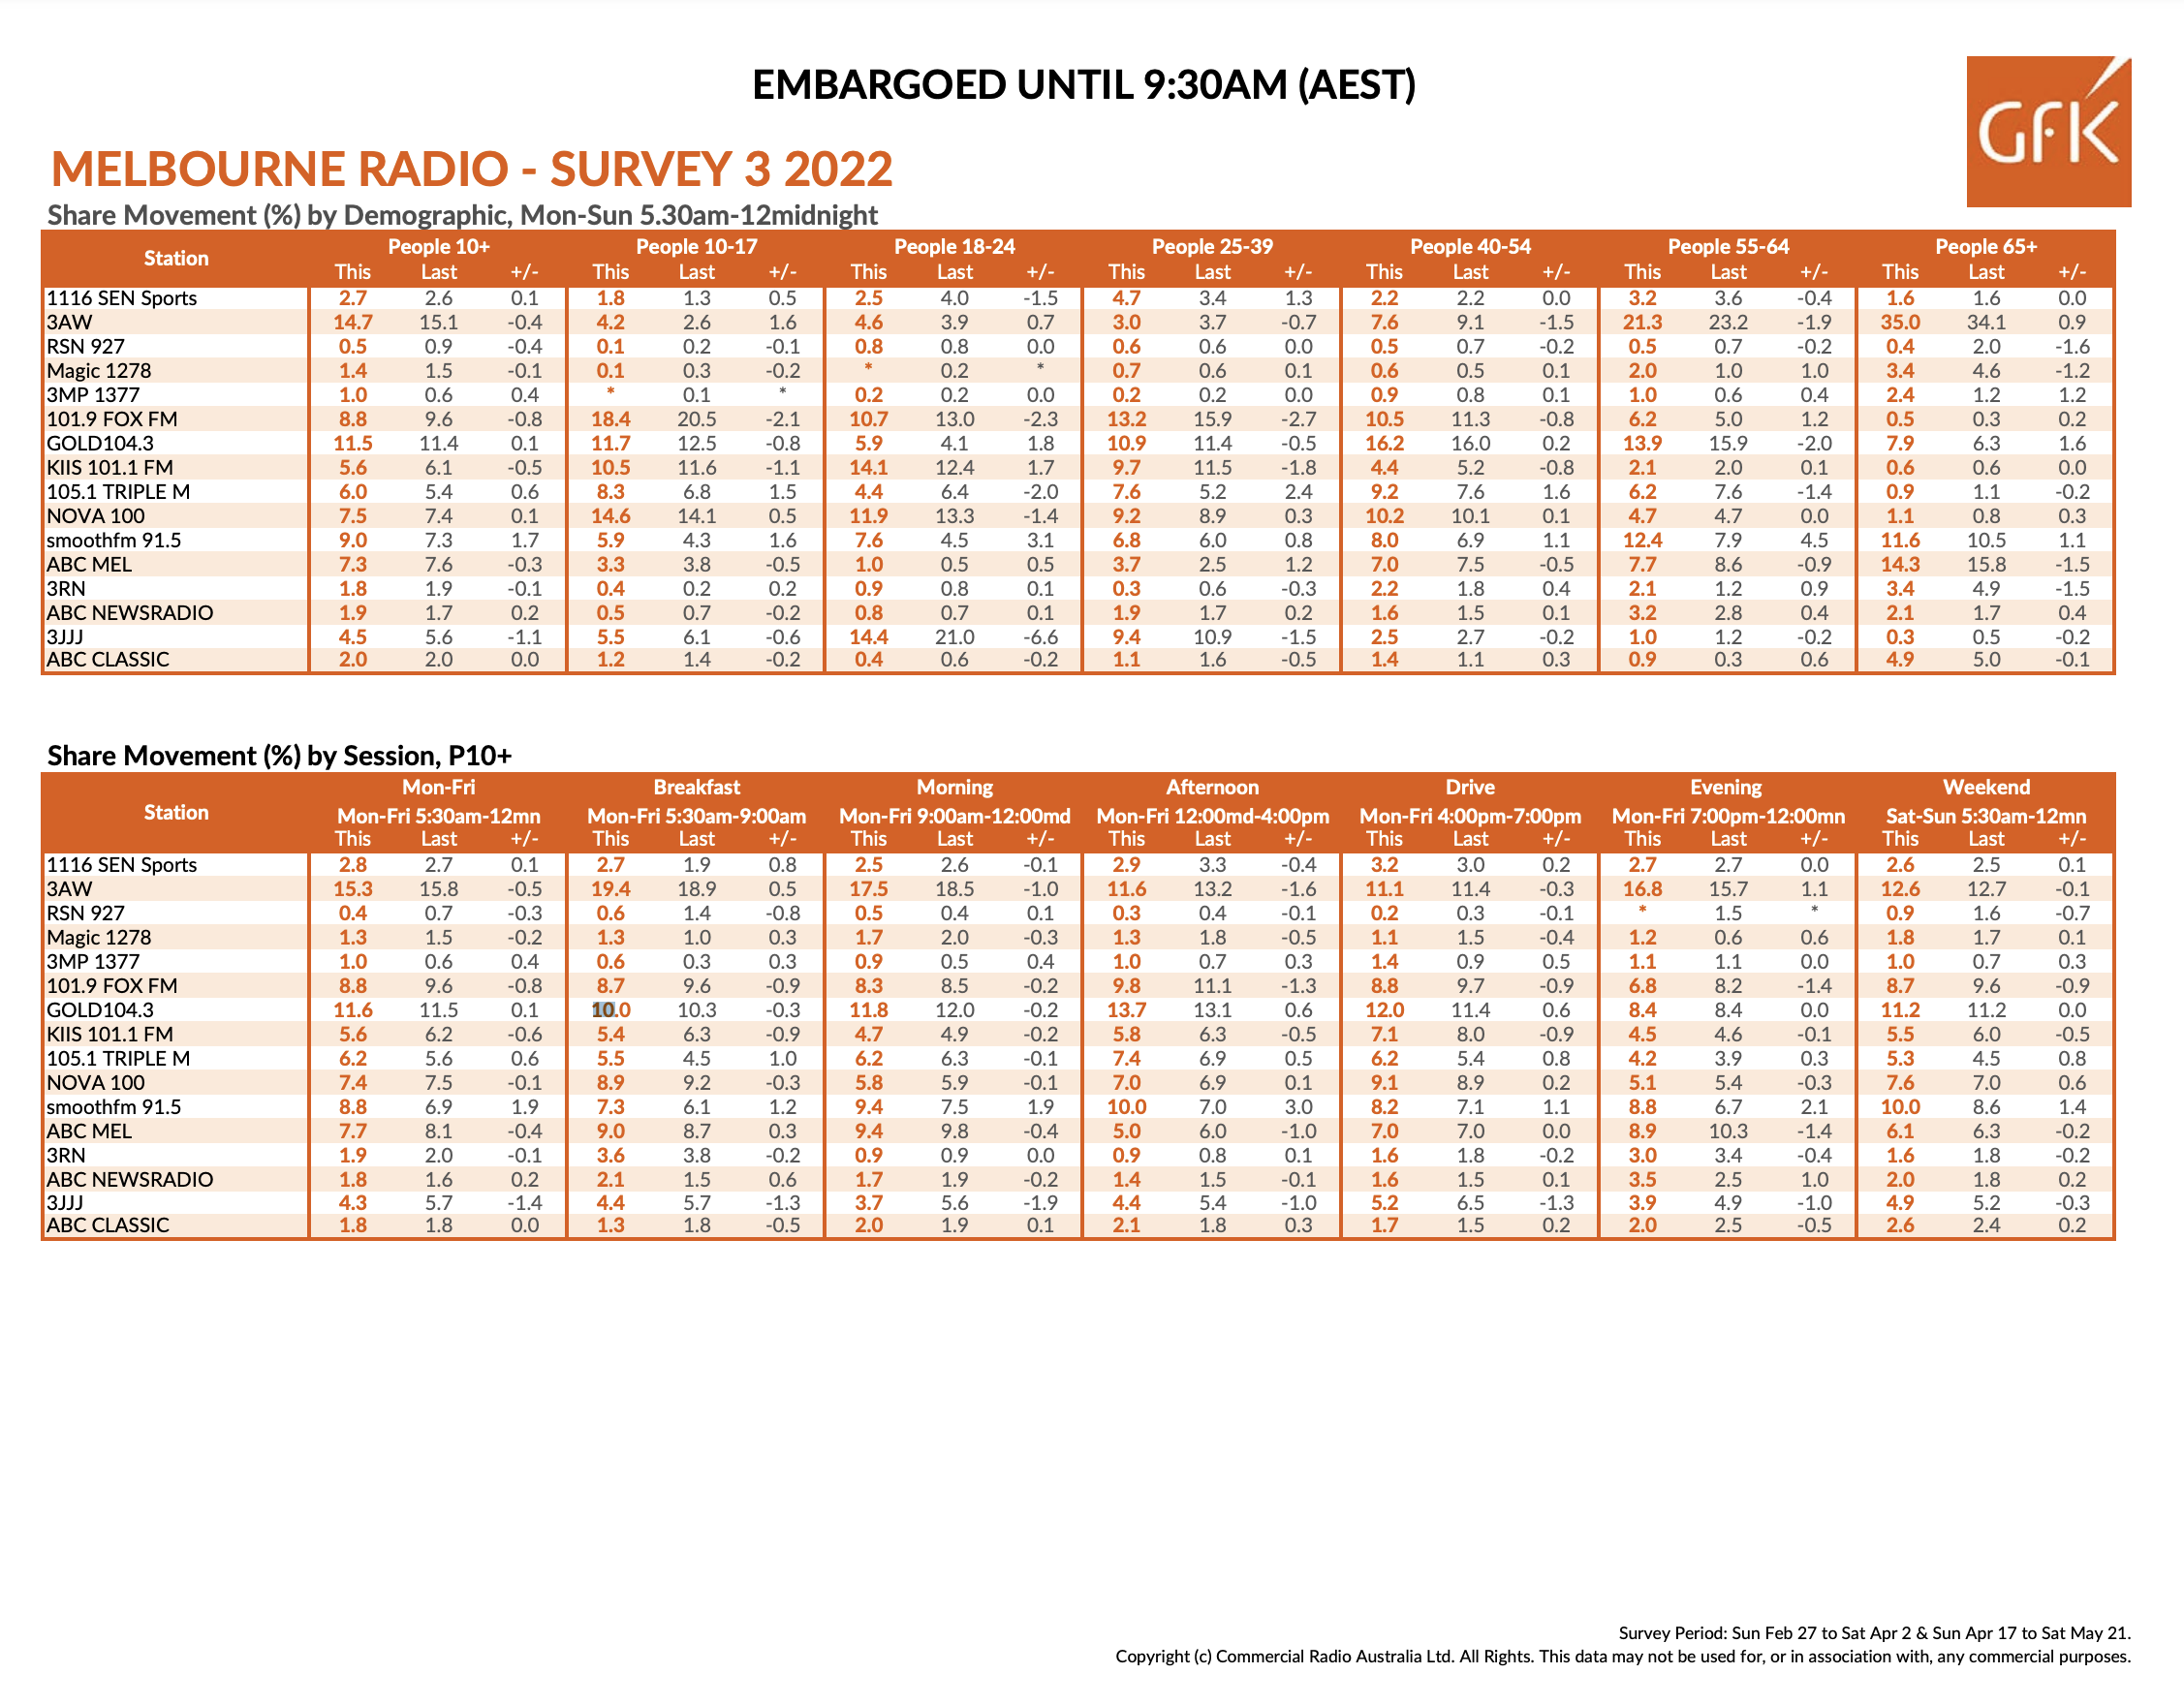 Melbourne radio ratings winners Survey 3 2022